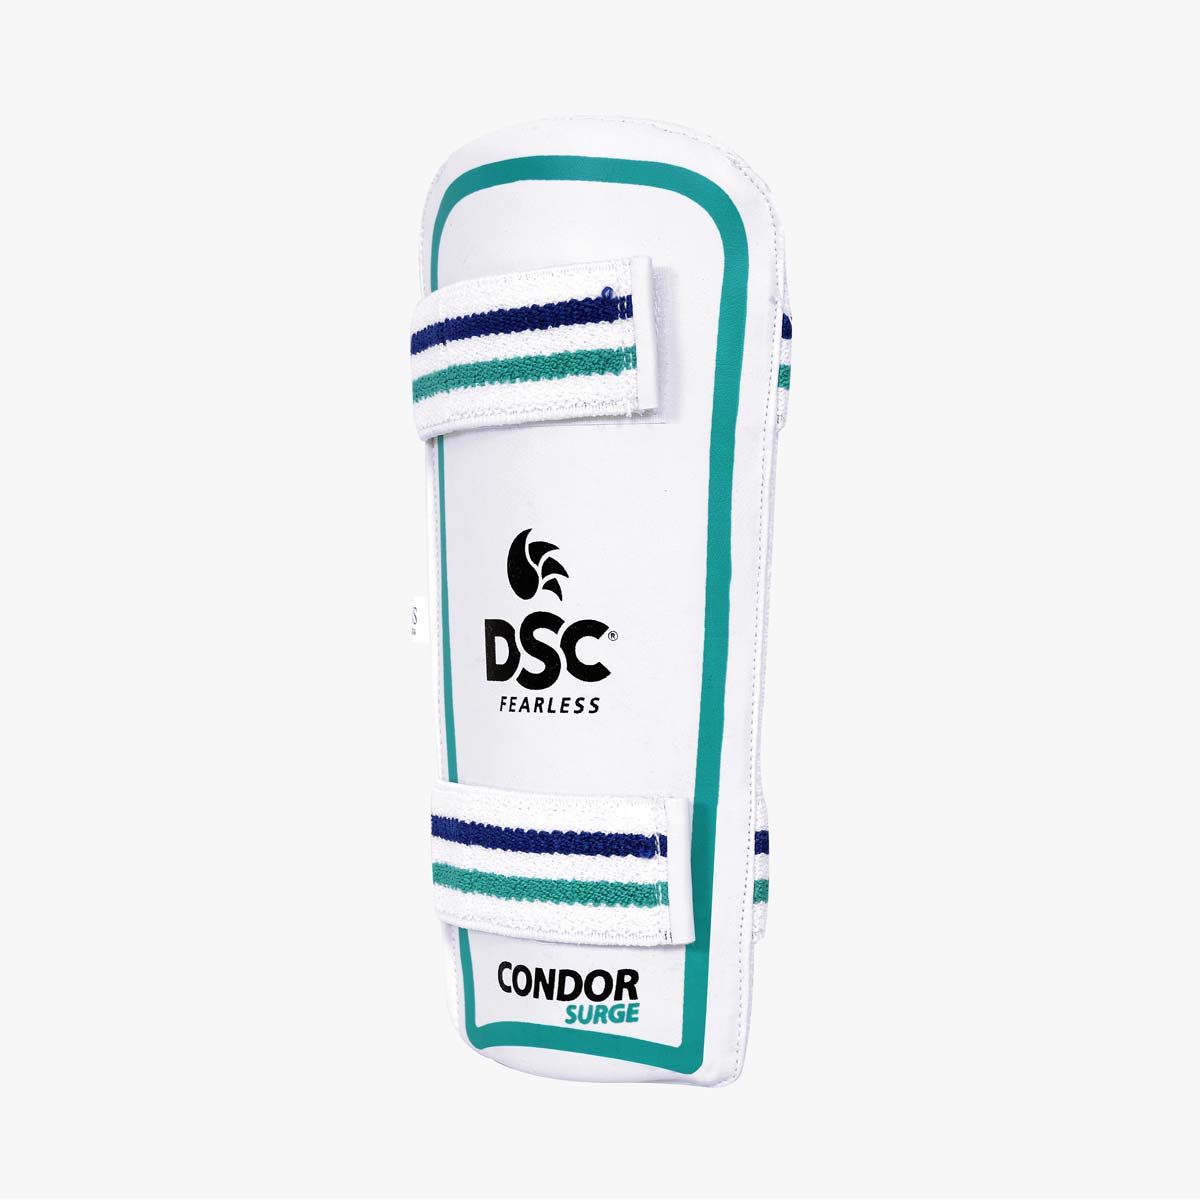 DSC CONDOR SURGE ARM GUARD -2024